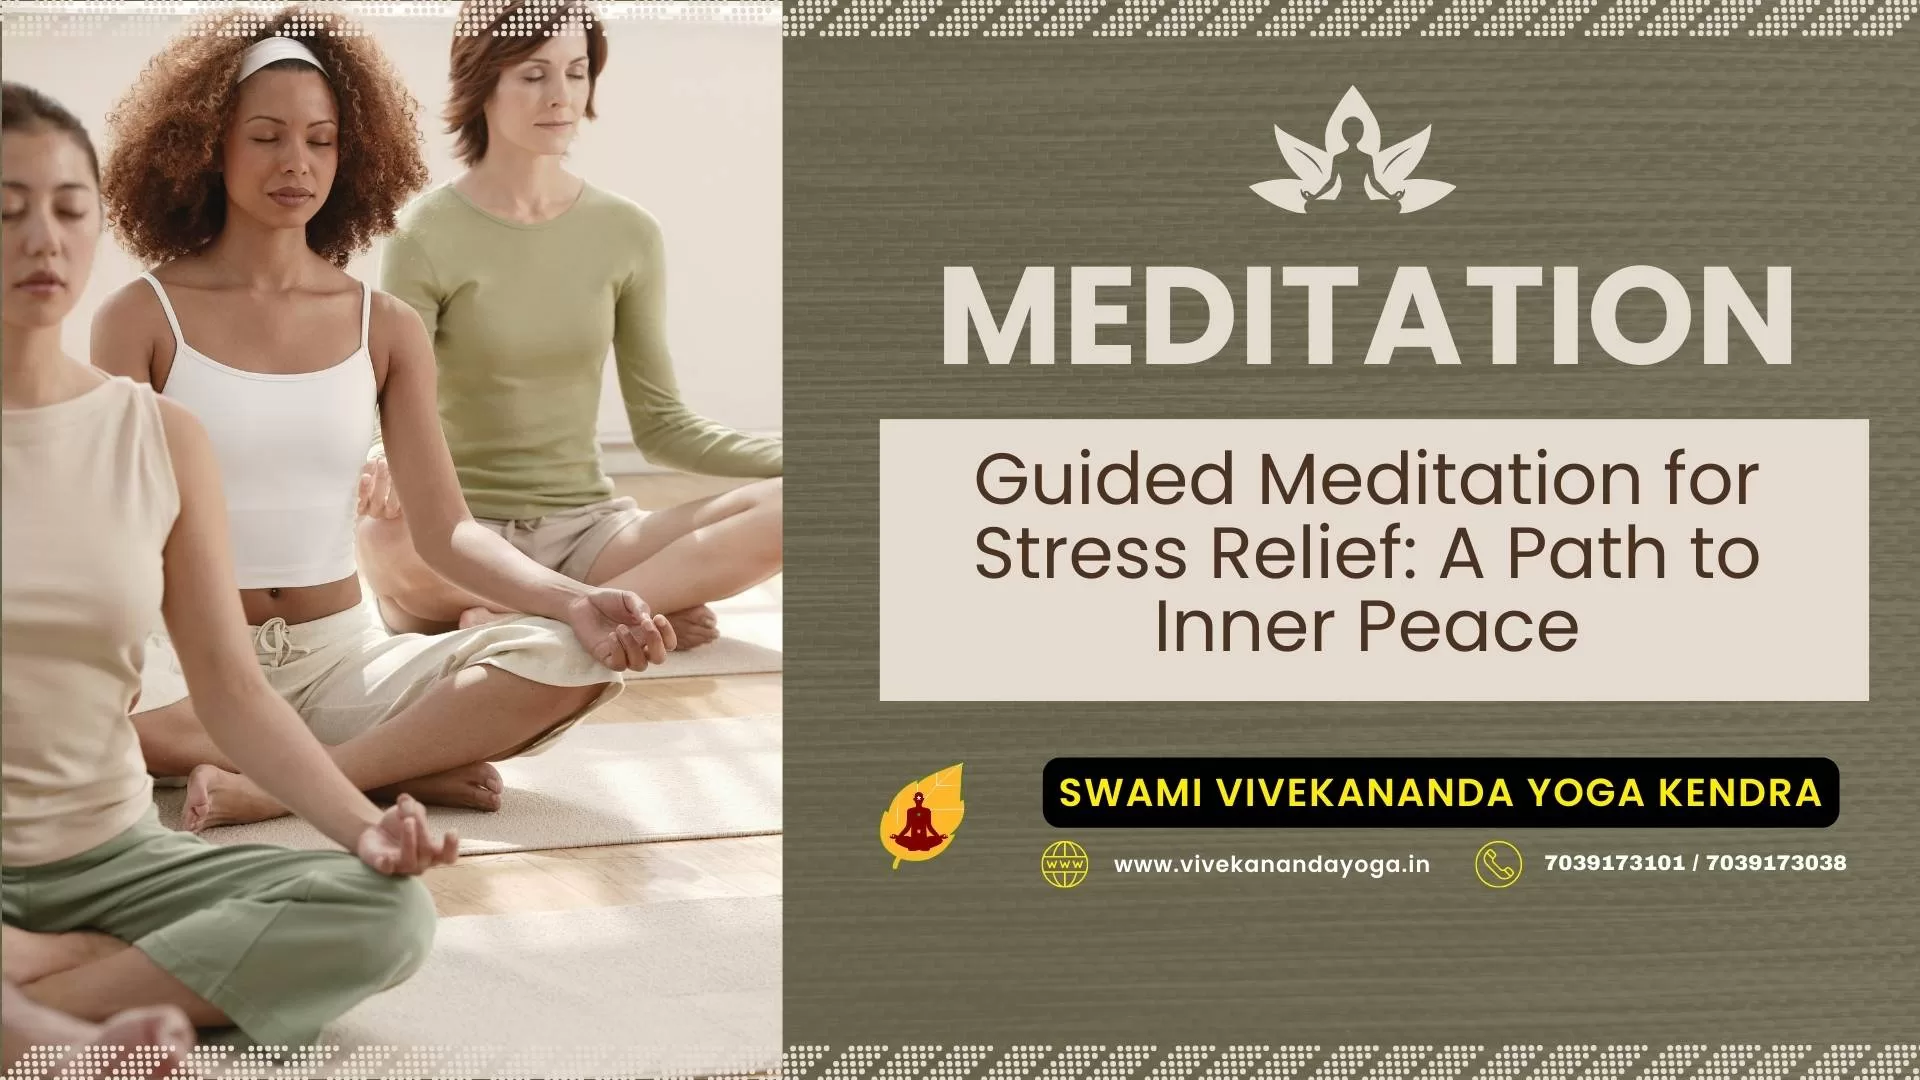 10-Minute Meditation For Stress 